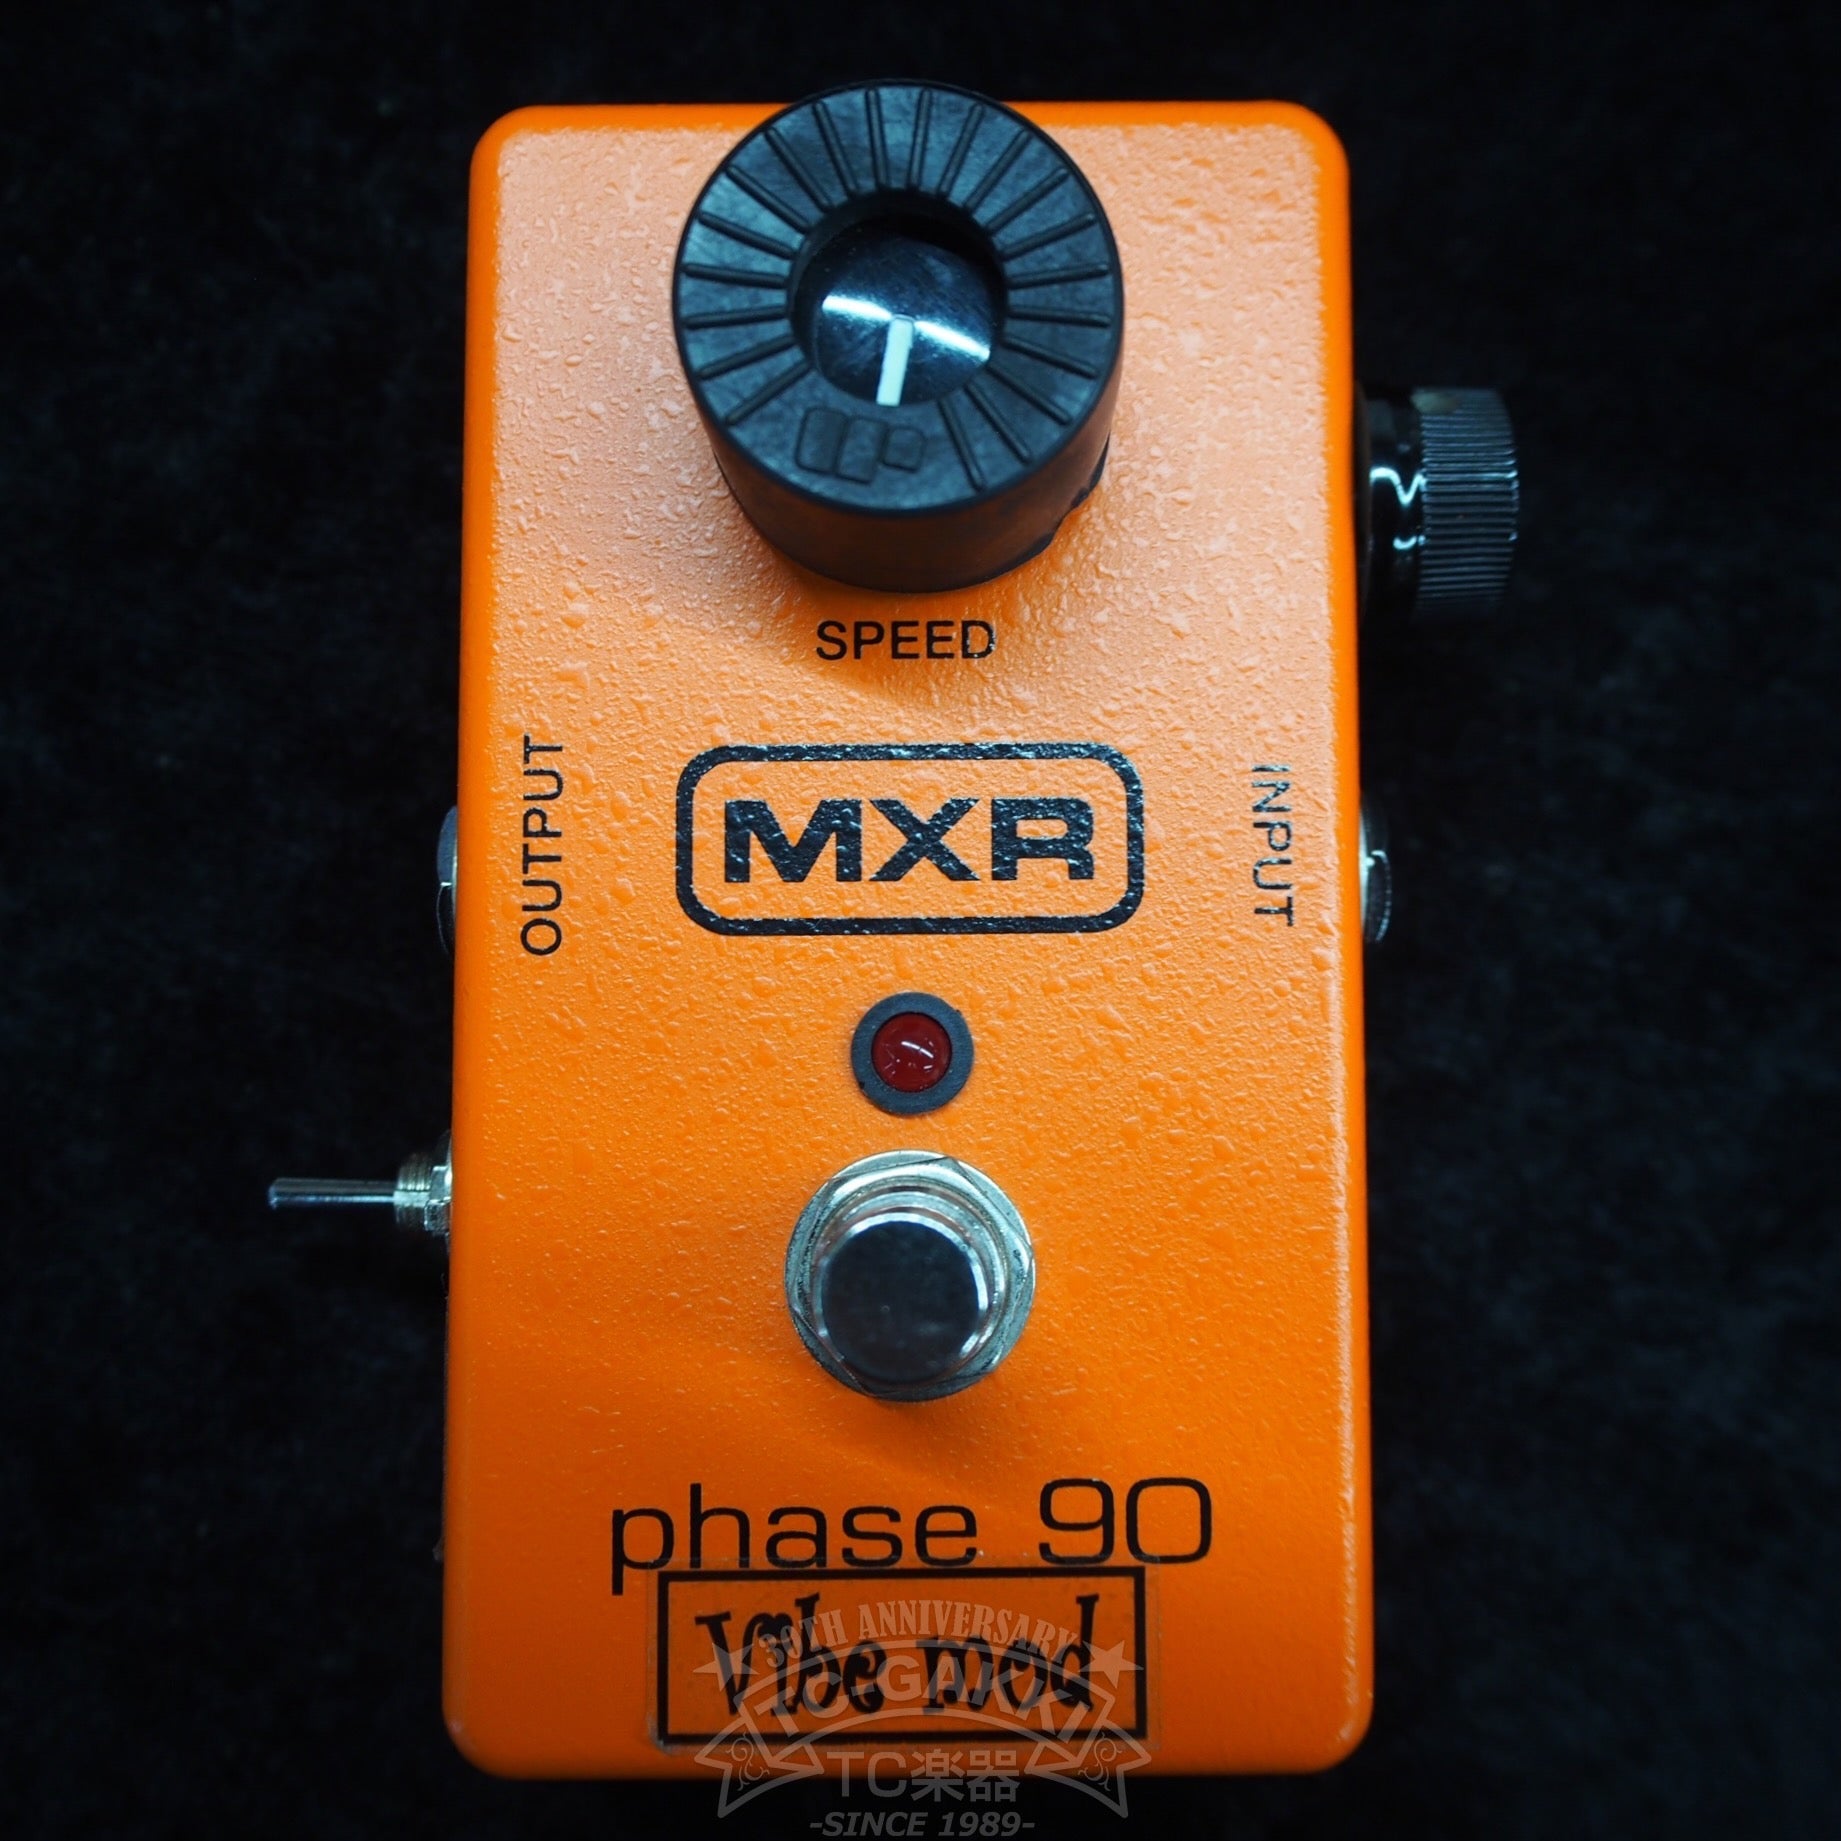 MXR M-101 phase 90 Vibe mod